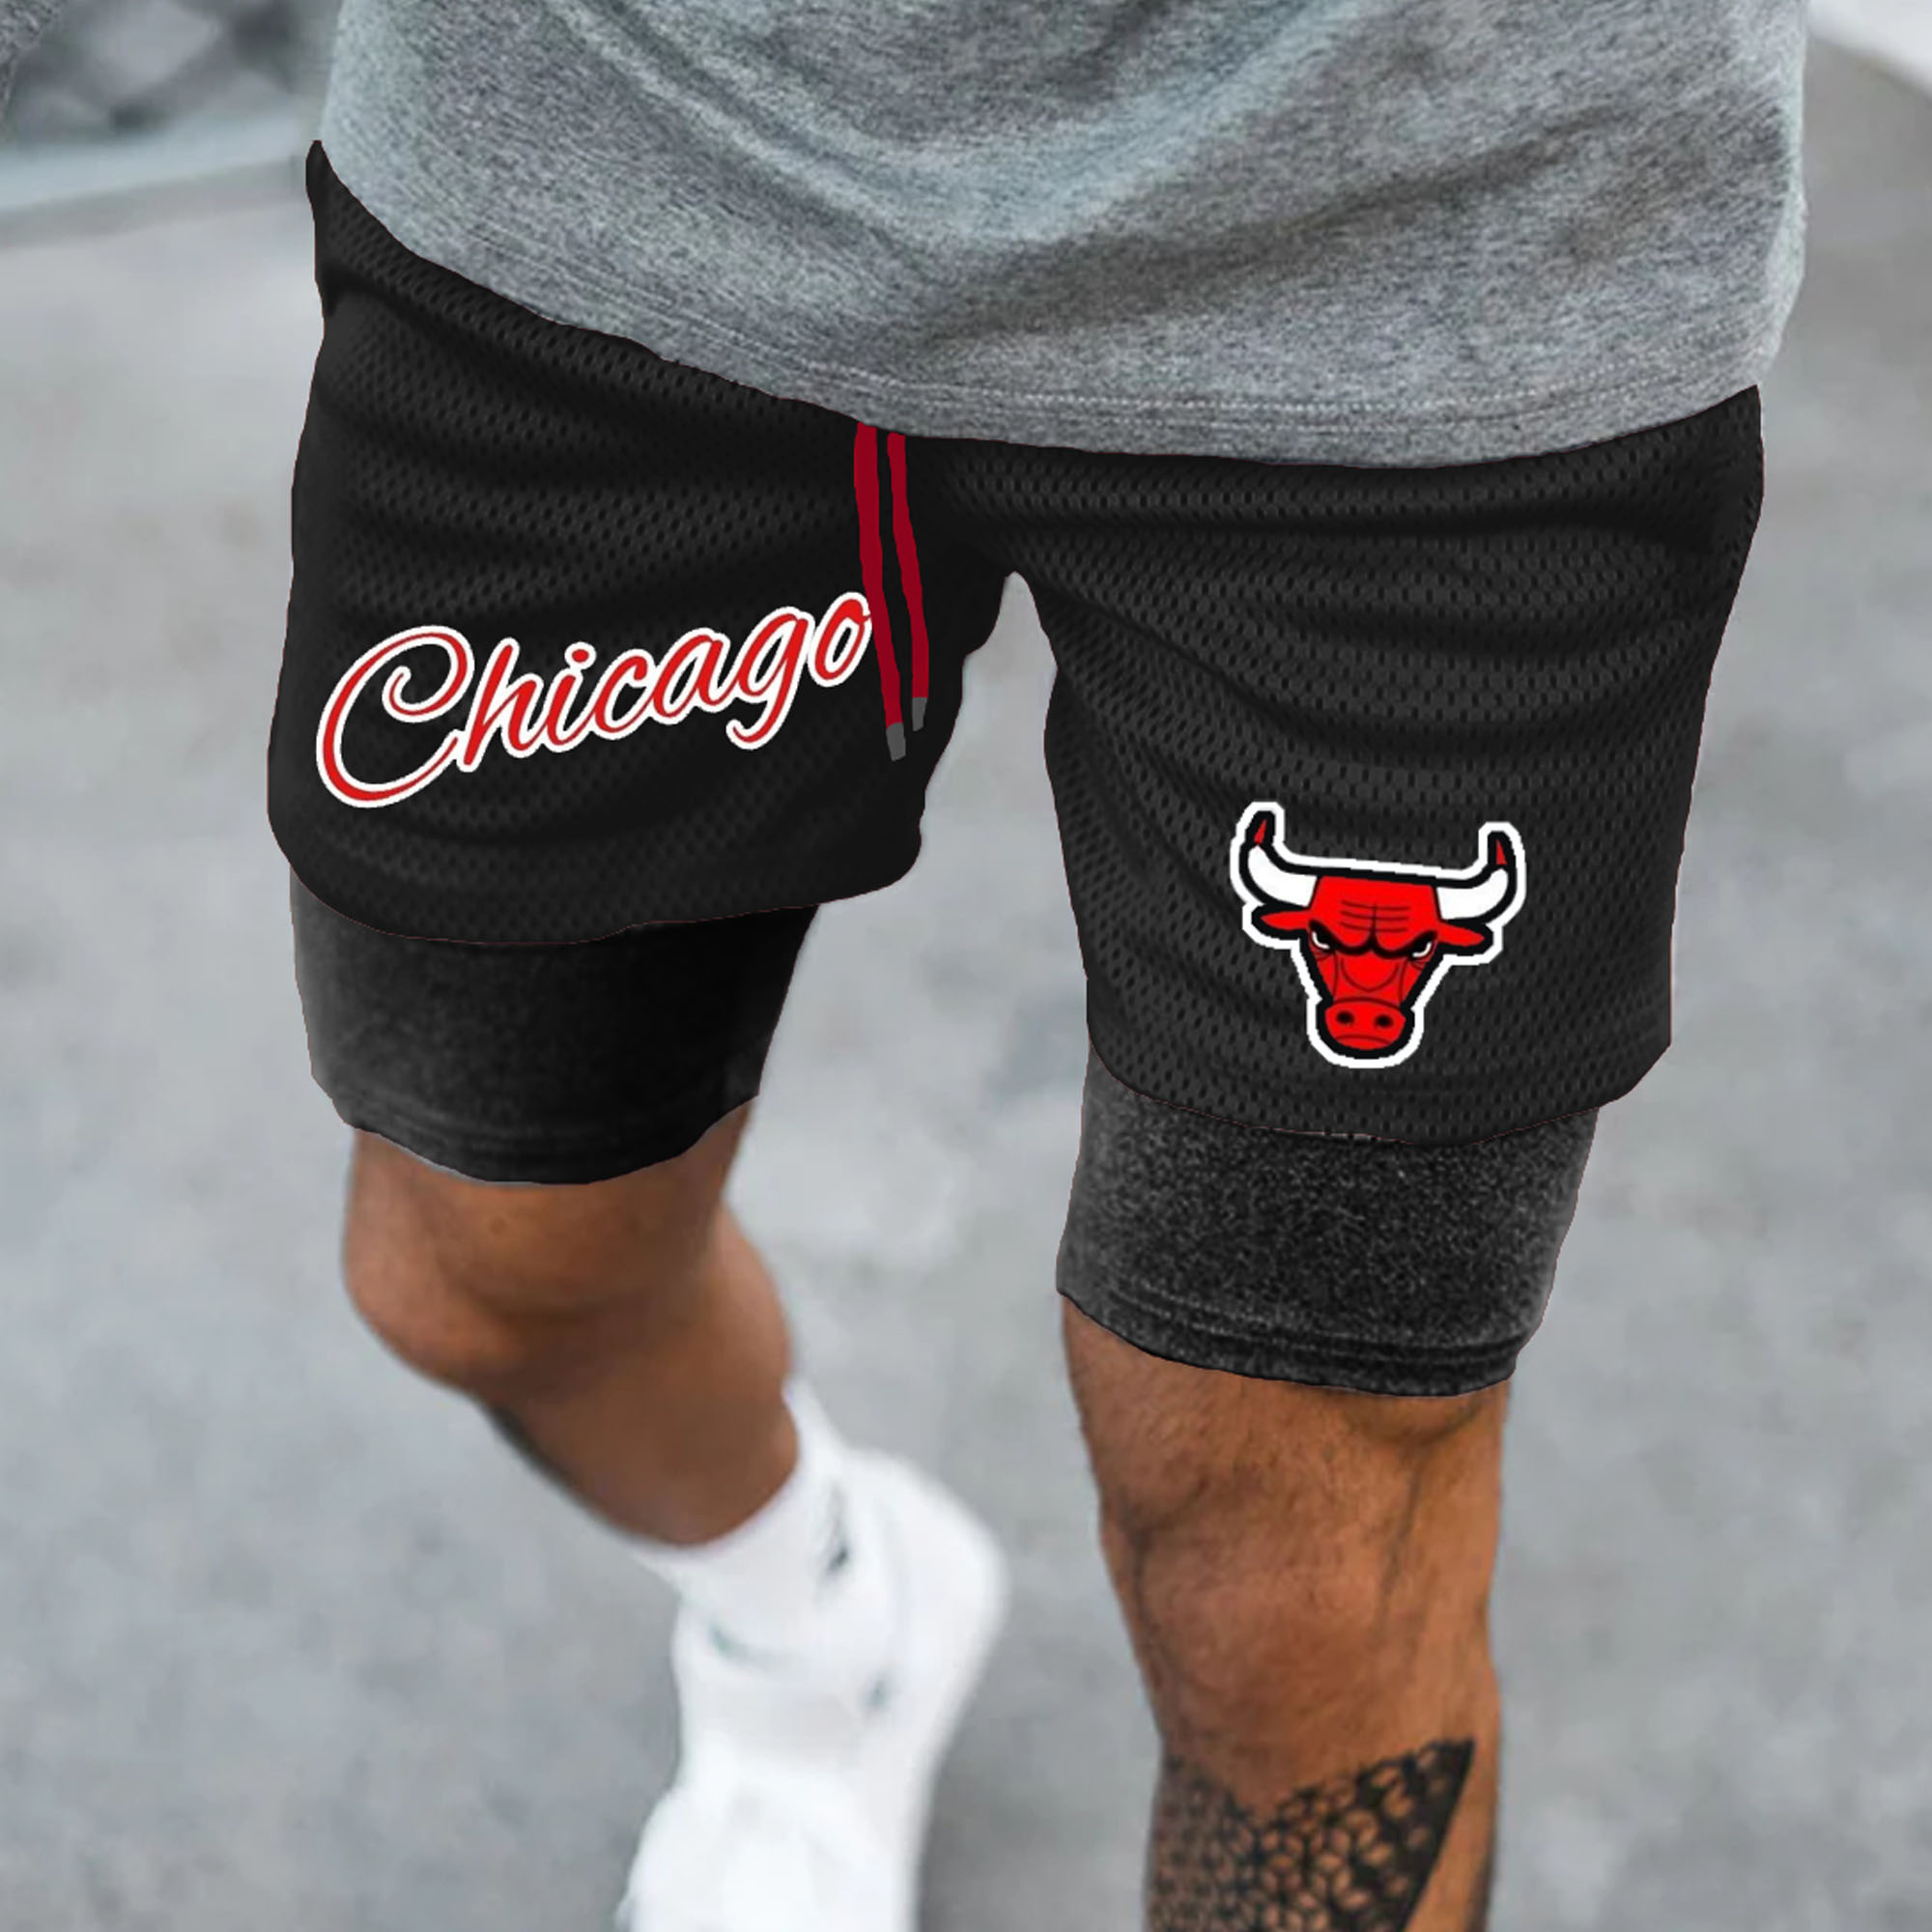 Men's Bulls NBA Mesh Performance Shorts